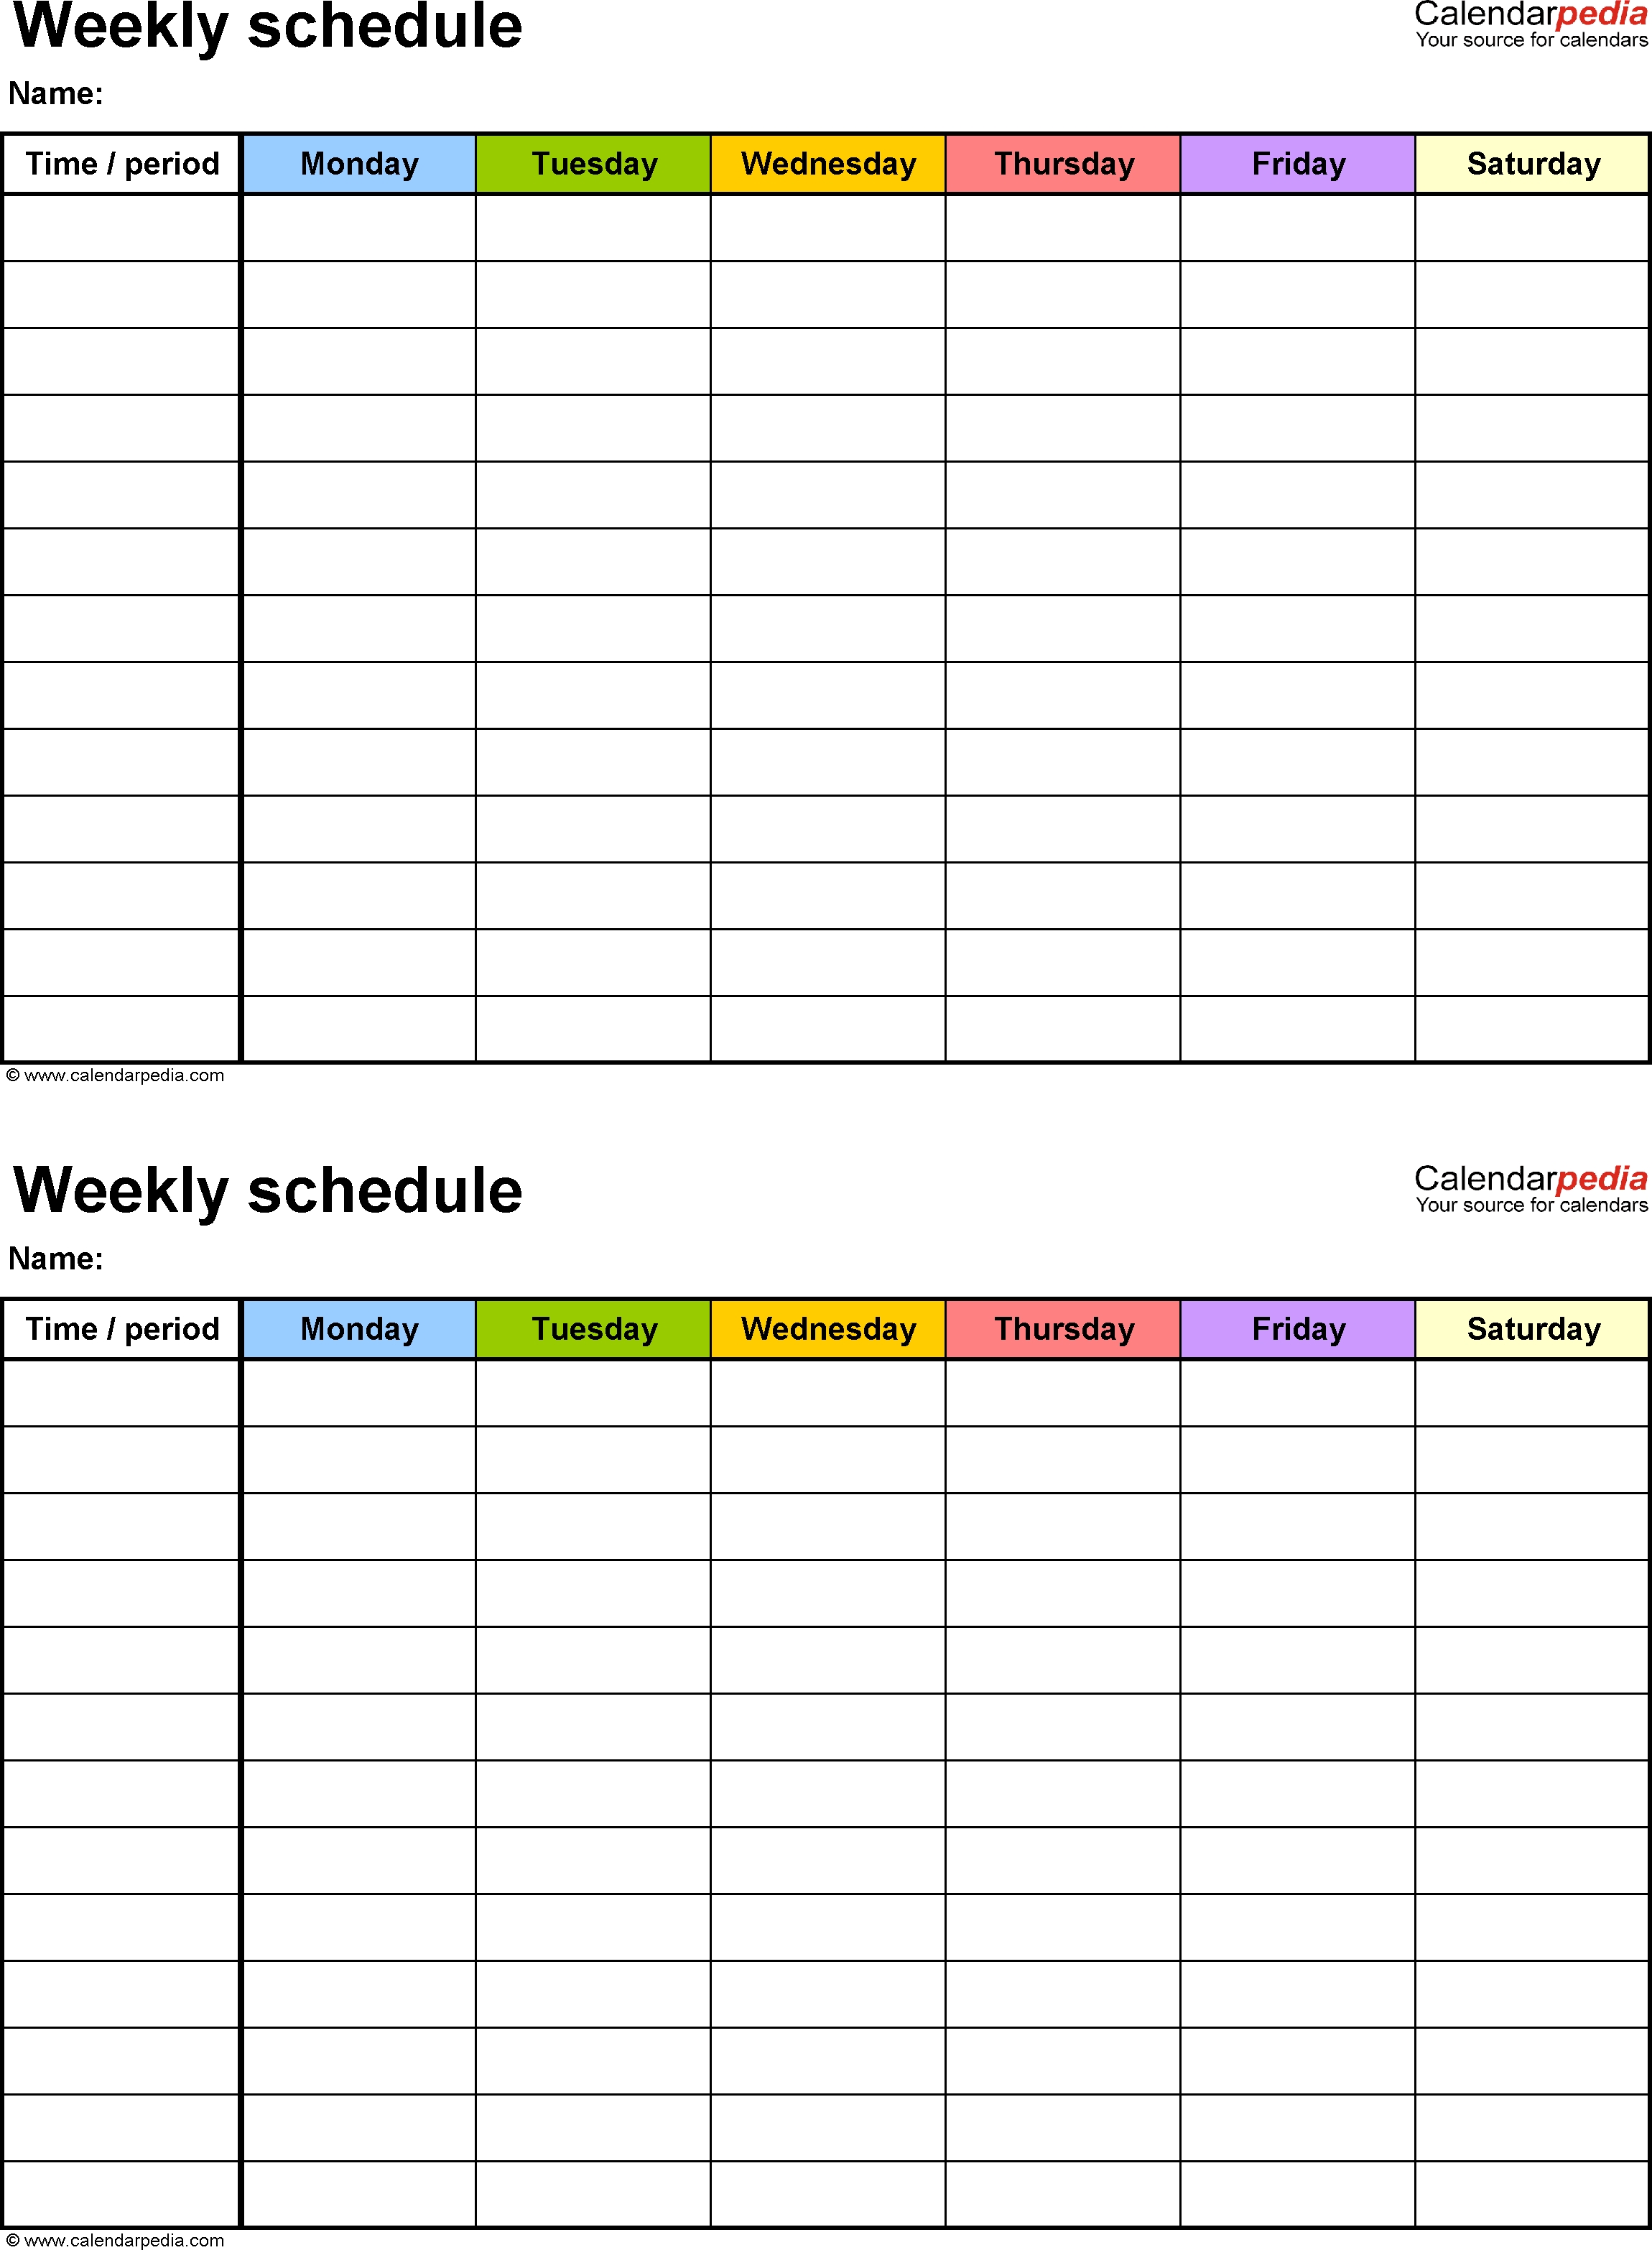 Free Weekly Schedule Templates For Word - 18 Templates Blank 6 Week Calendar Printable